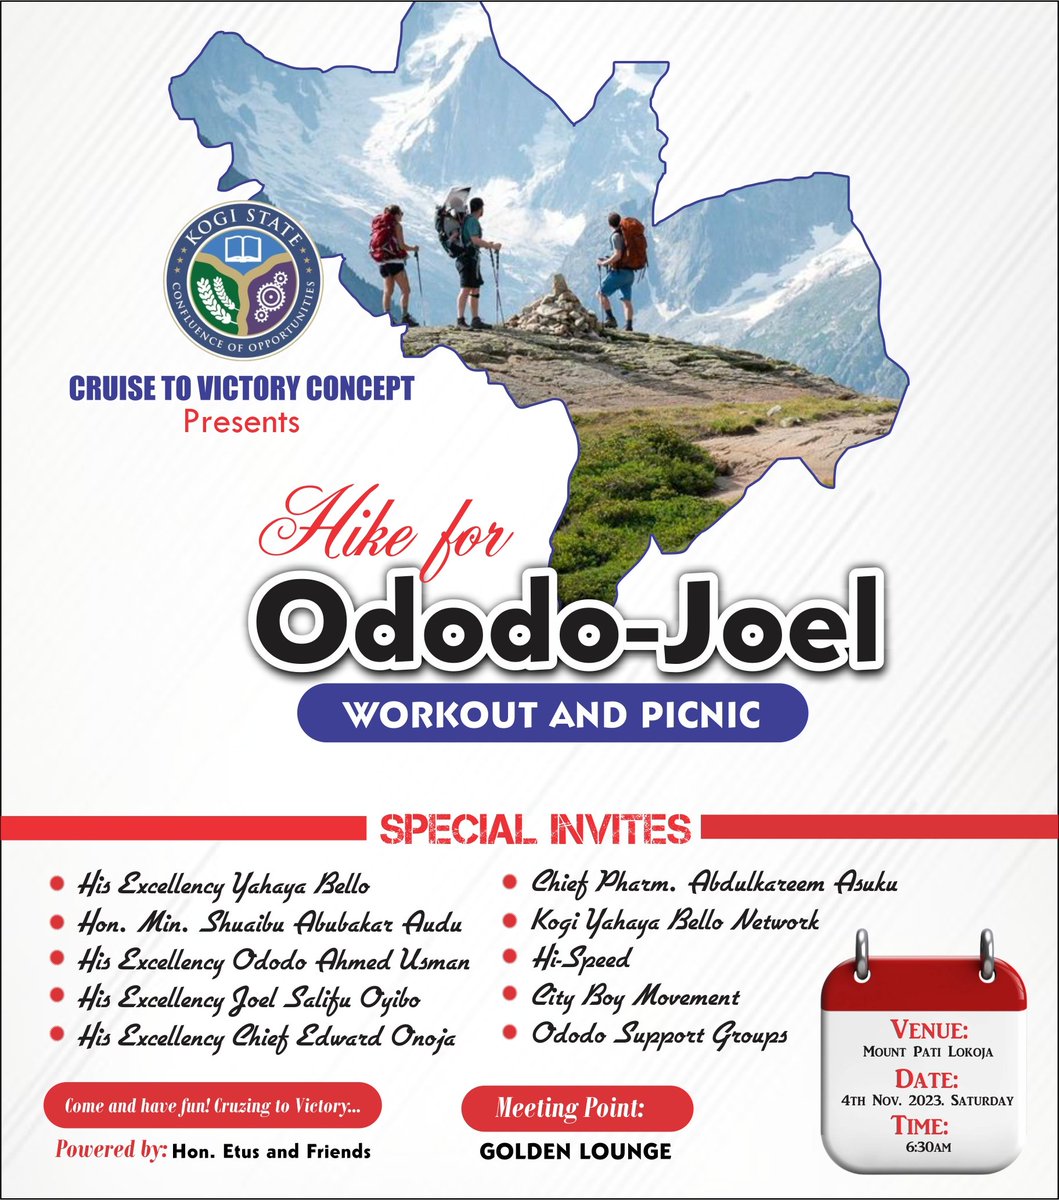 Come Hike with us at Mount Pati, Lokoja, for Ododo-Joel @OfficialOAU Gubernatorial victory.. It's gonna be fun with music and side attractions.. 
#eveyone #Kogidecide #Ododo4KogiGovernor #APC #OdodoJoel @KogiAPC_CC @ododomediacentr